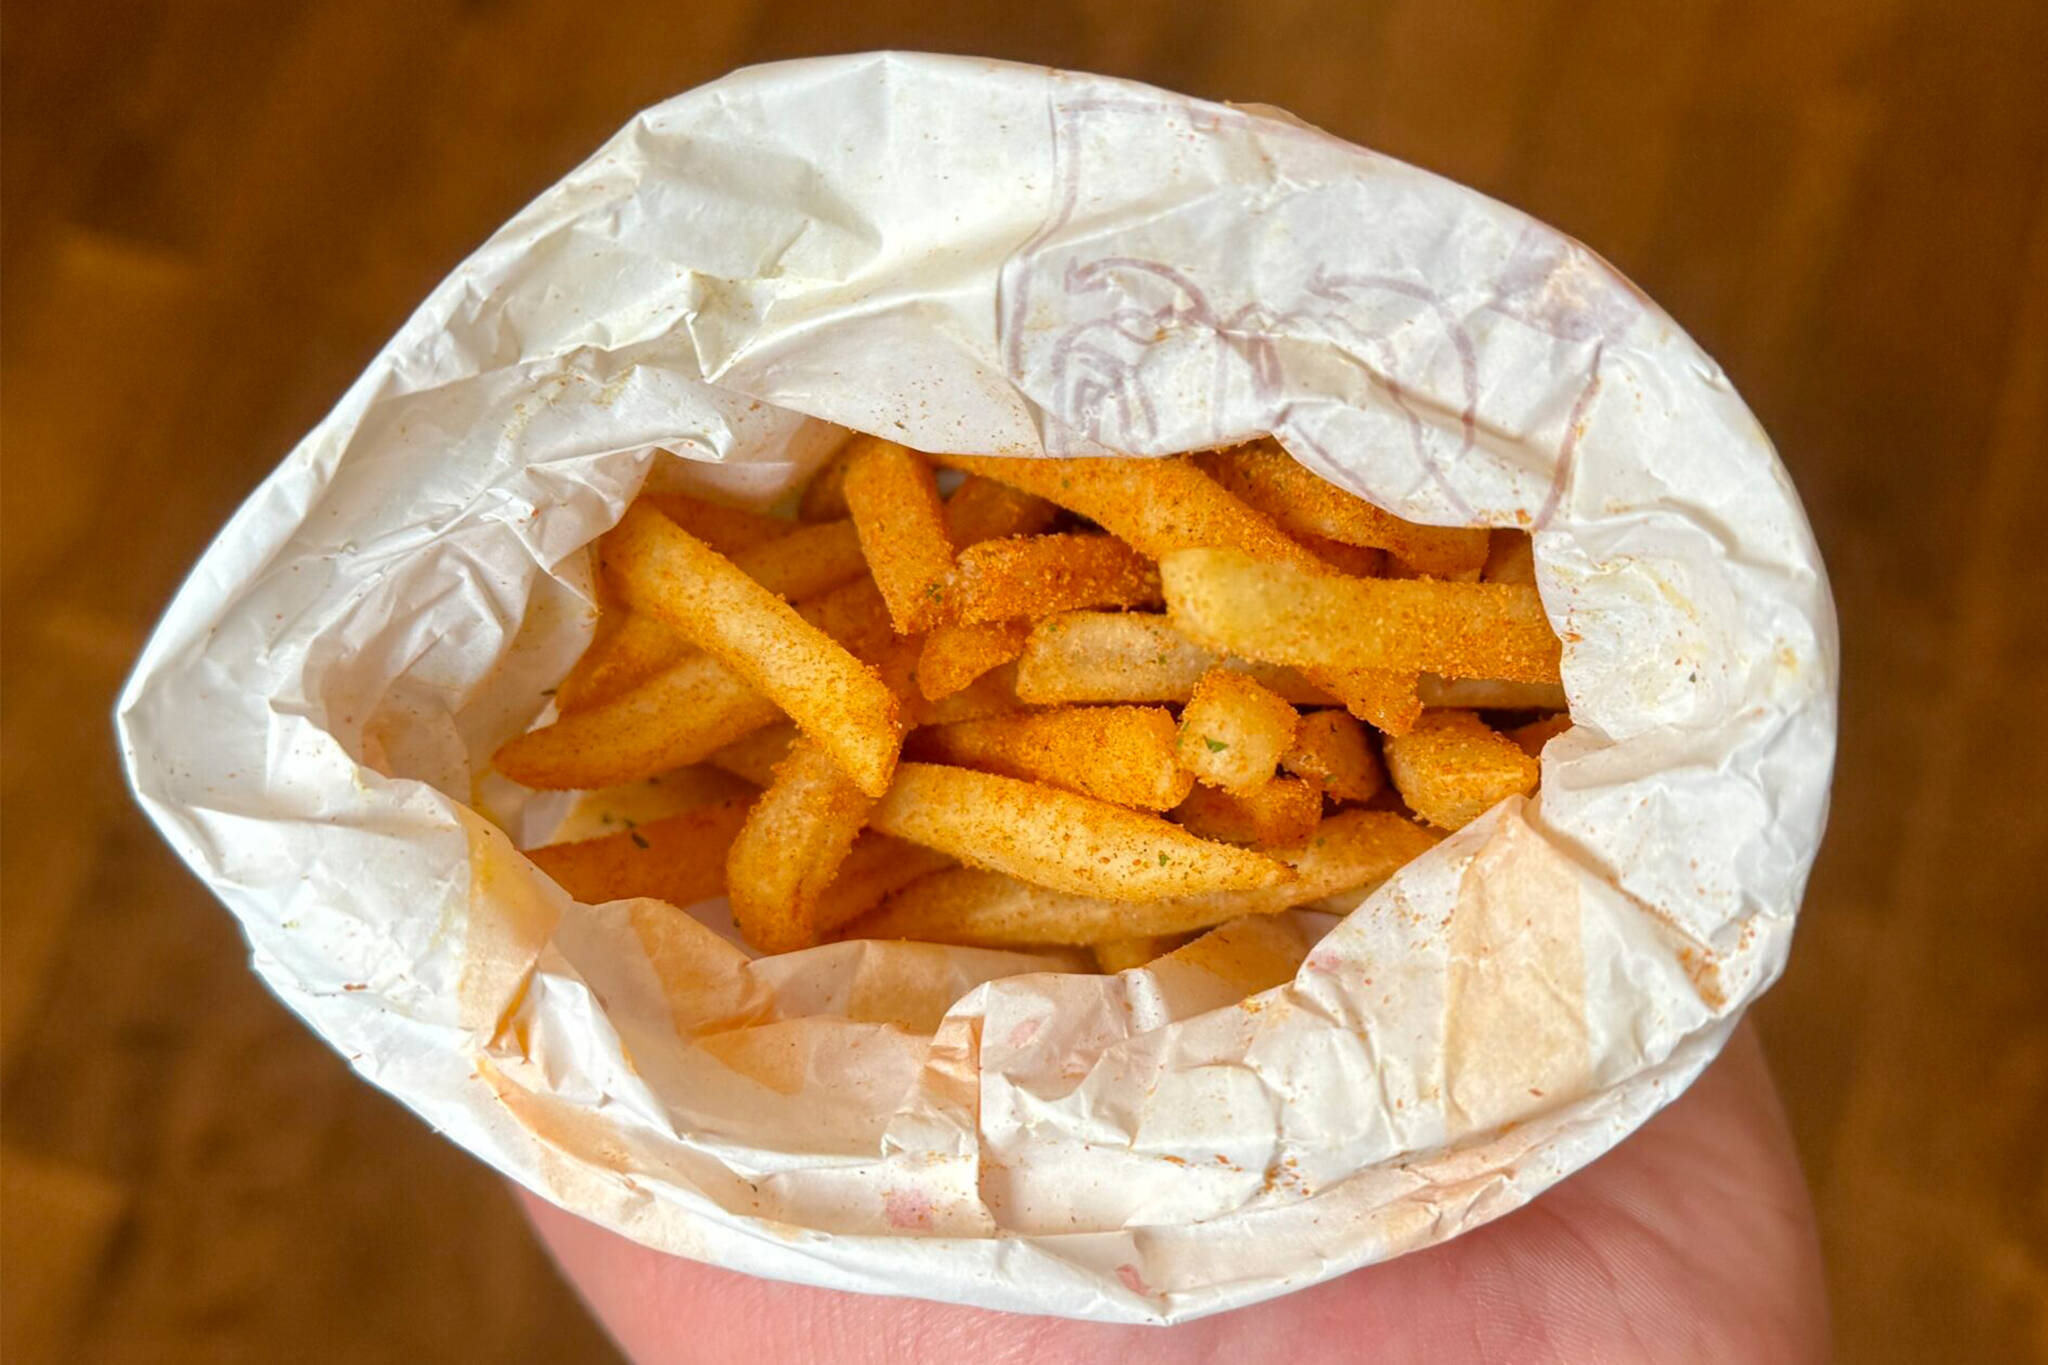 mcdonalds mcshaker fries canada